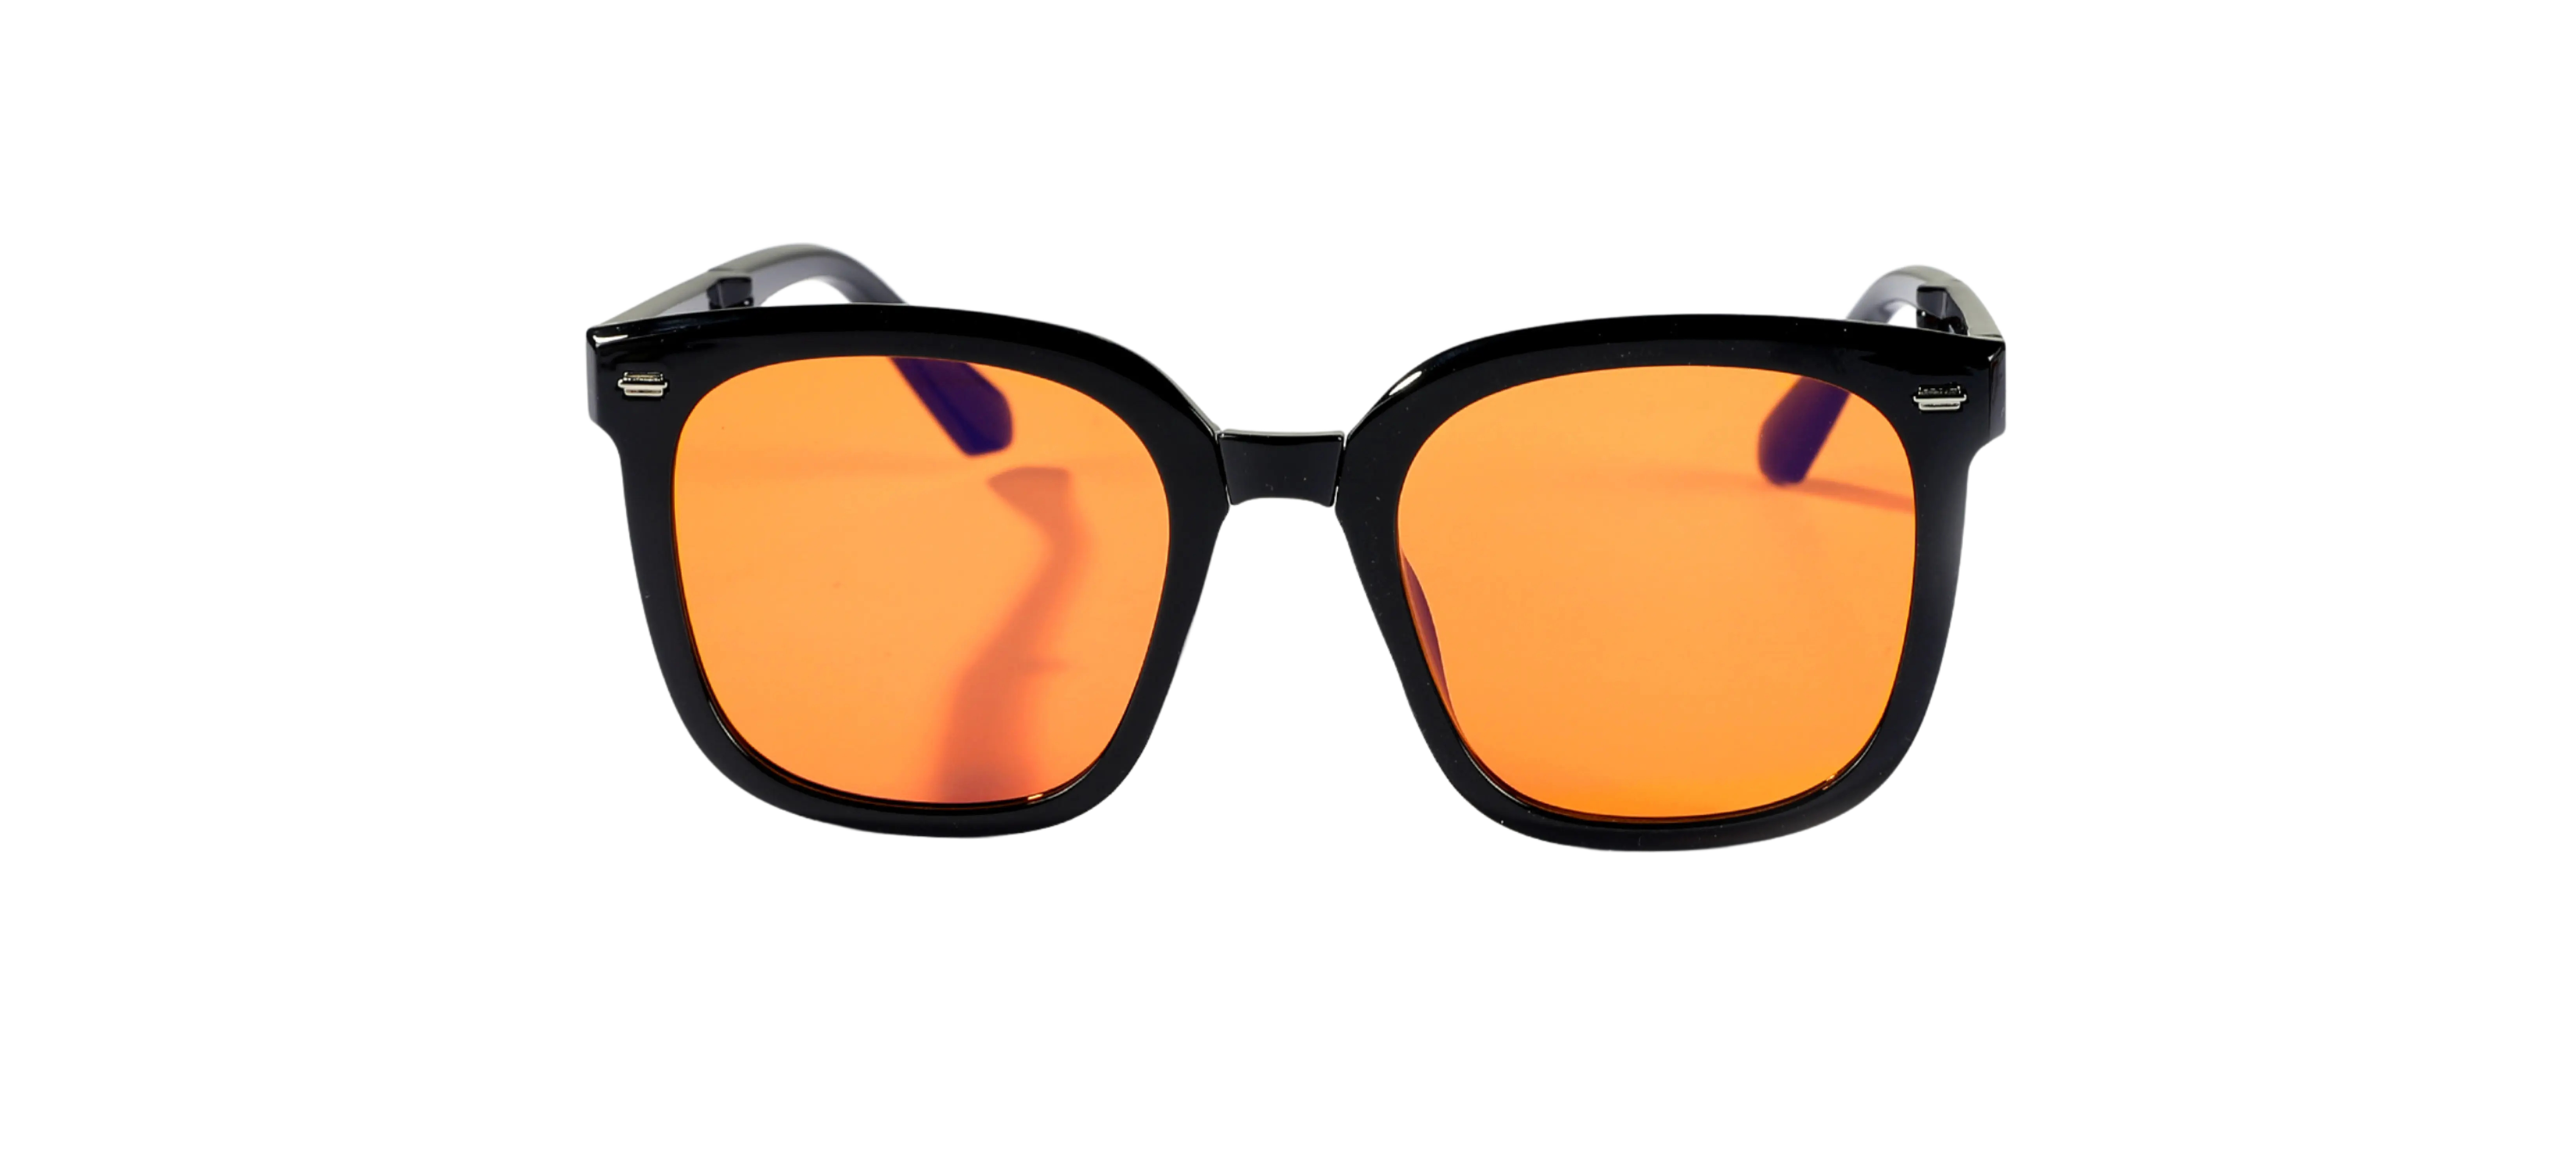 Black sunglasses with orange tinted lenses against a black background.